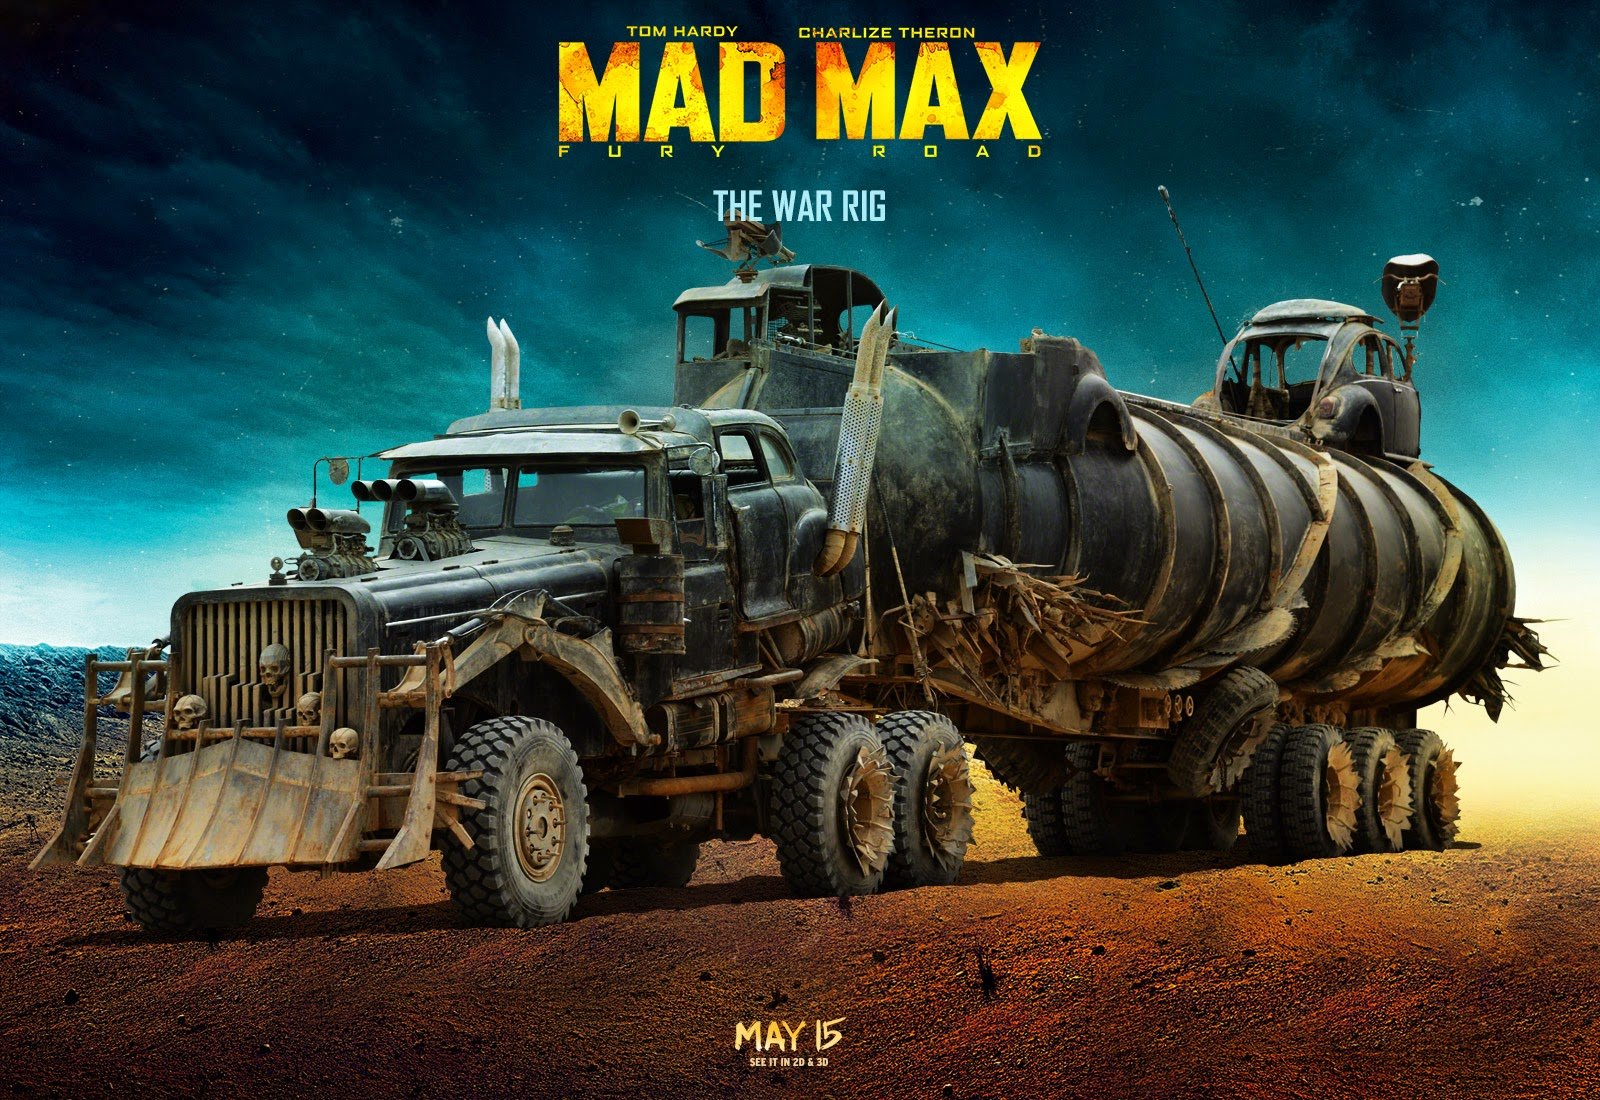 1mad max, Action, Adventure, Apocalyptic, Fighting, Fury, Futuristic, Mad, Max, Road, Sci fi, Warrior Wallpaper